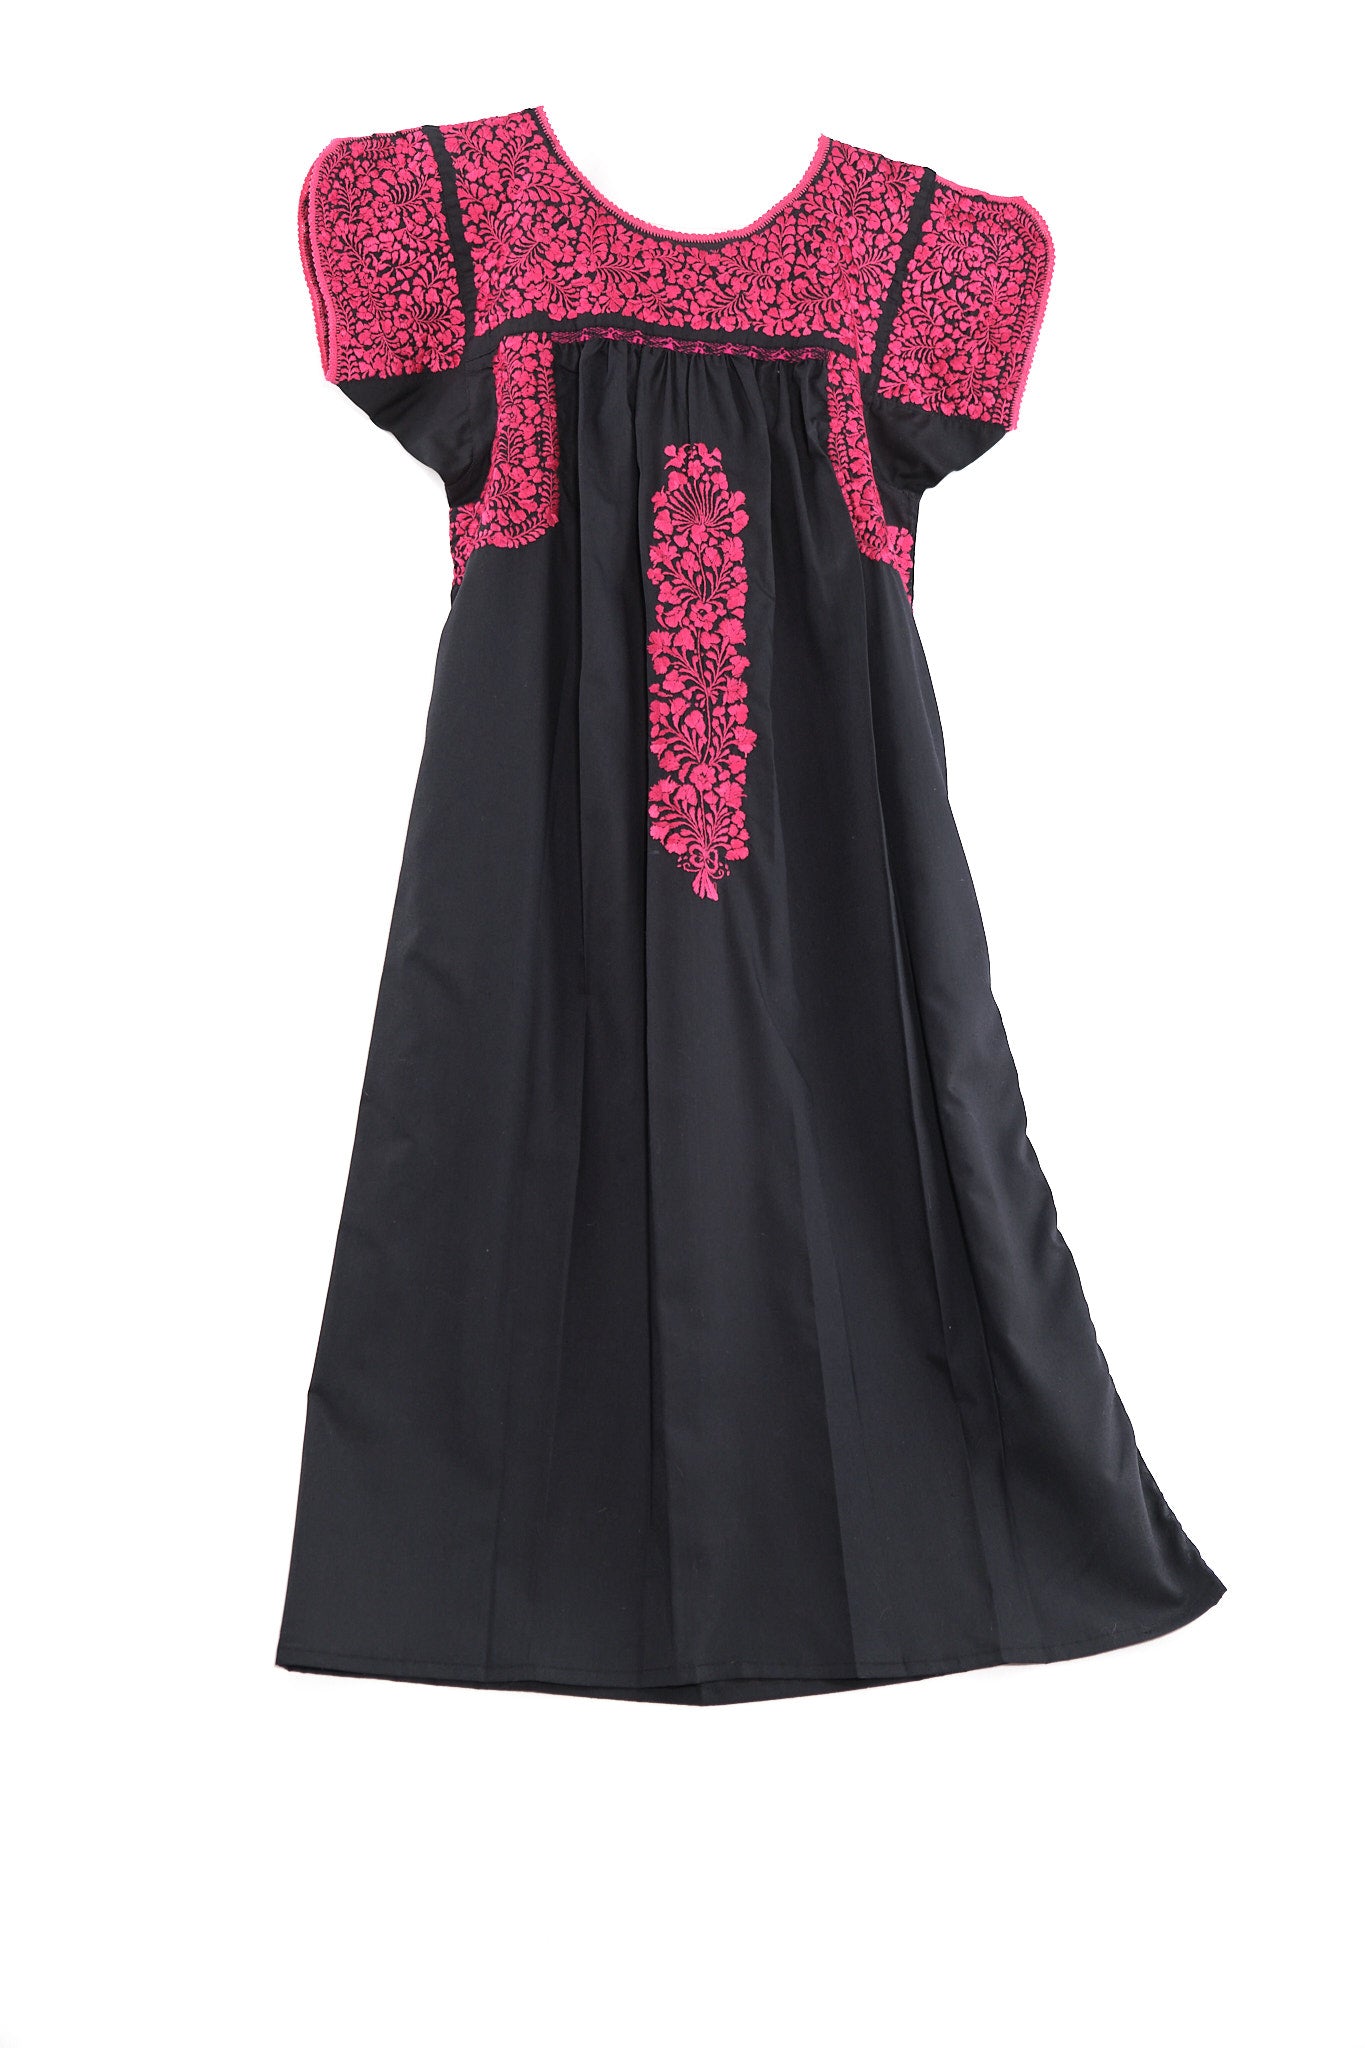 San Antonino Dress black with pink embroidery GARMENT